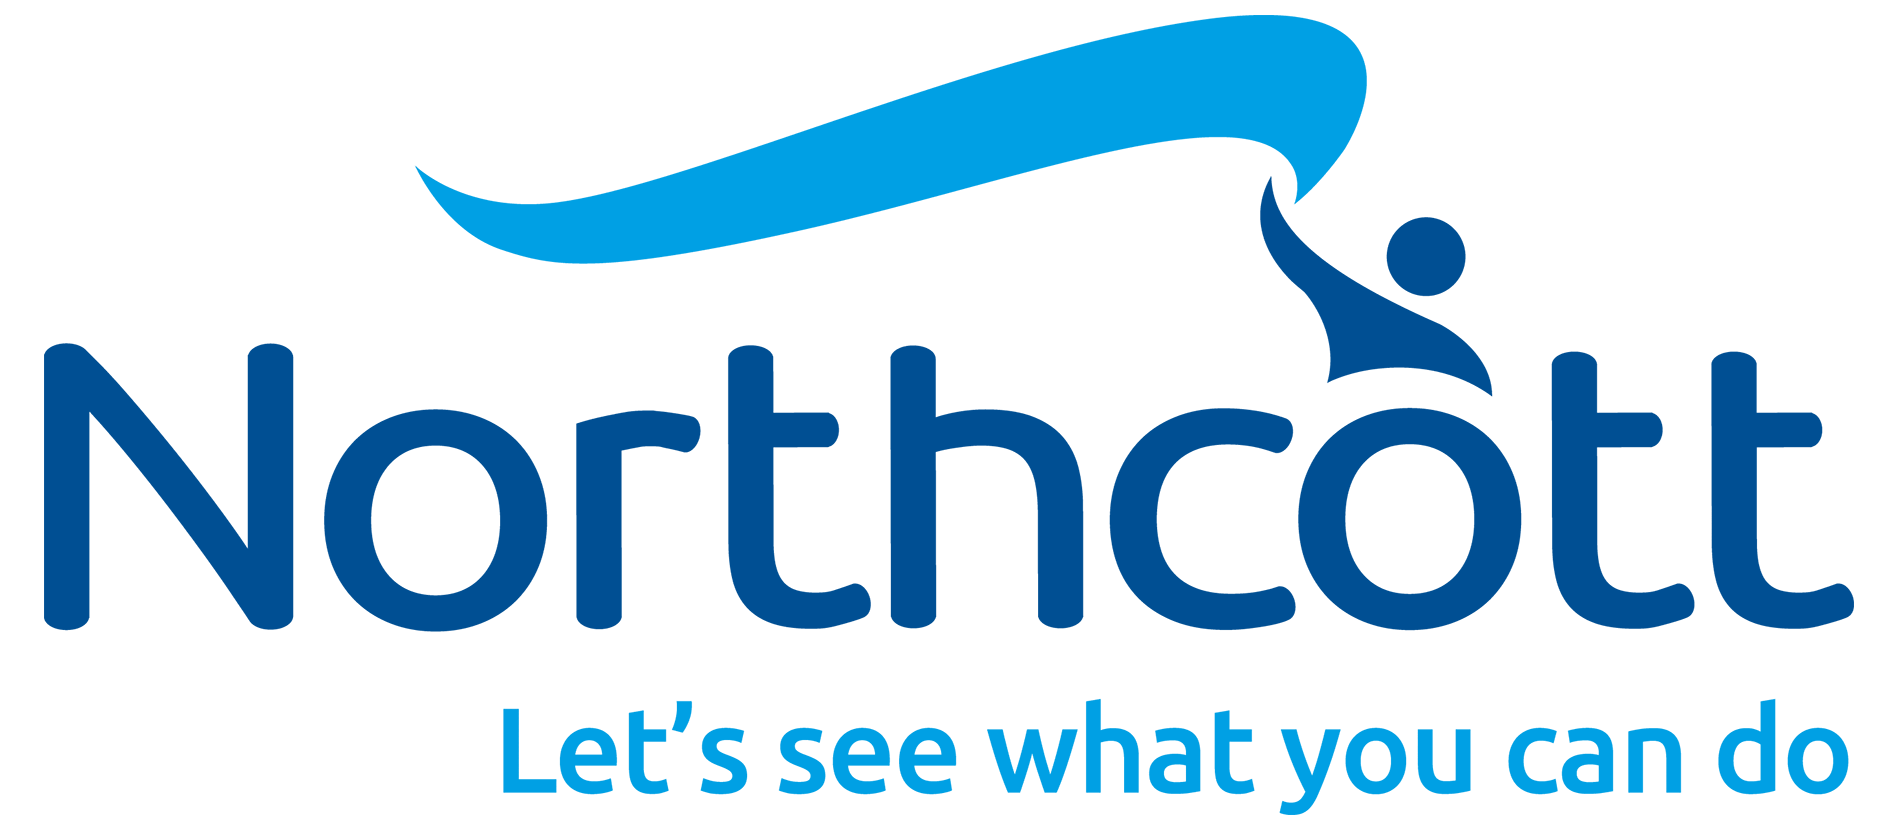 Astroglide supports Northcott